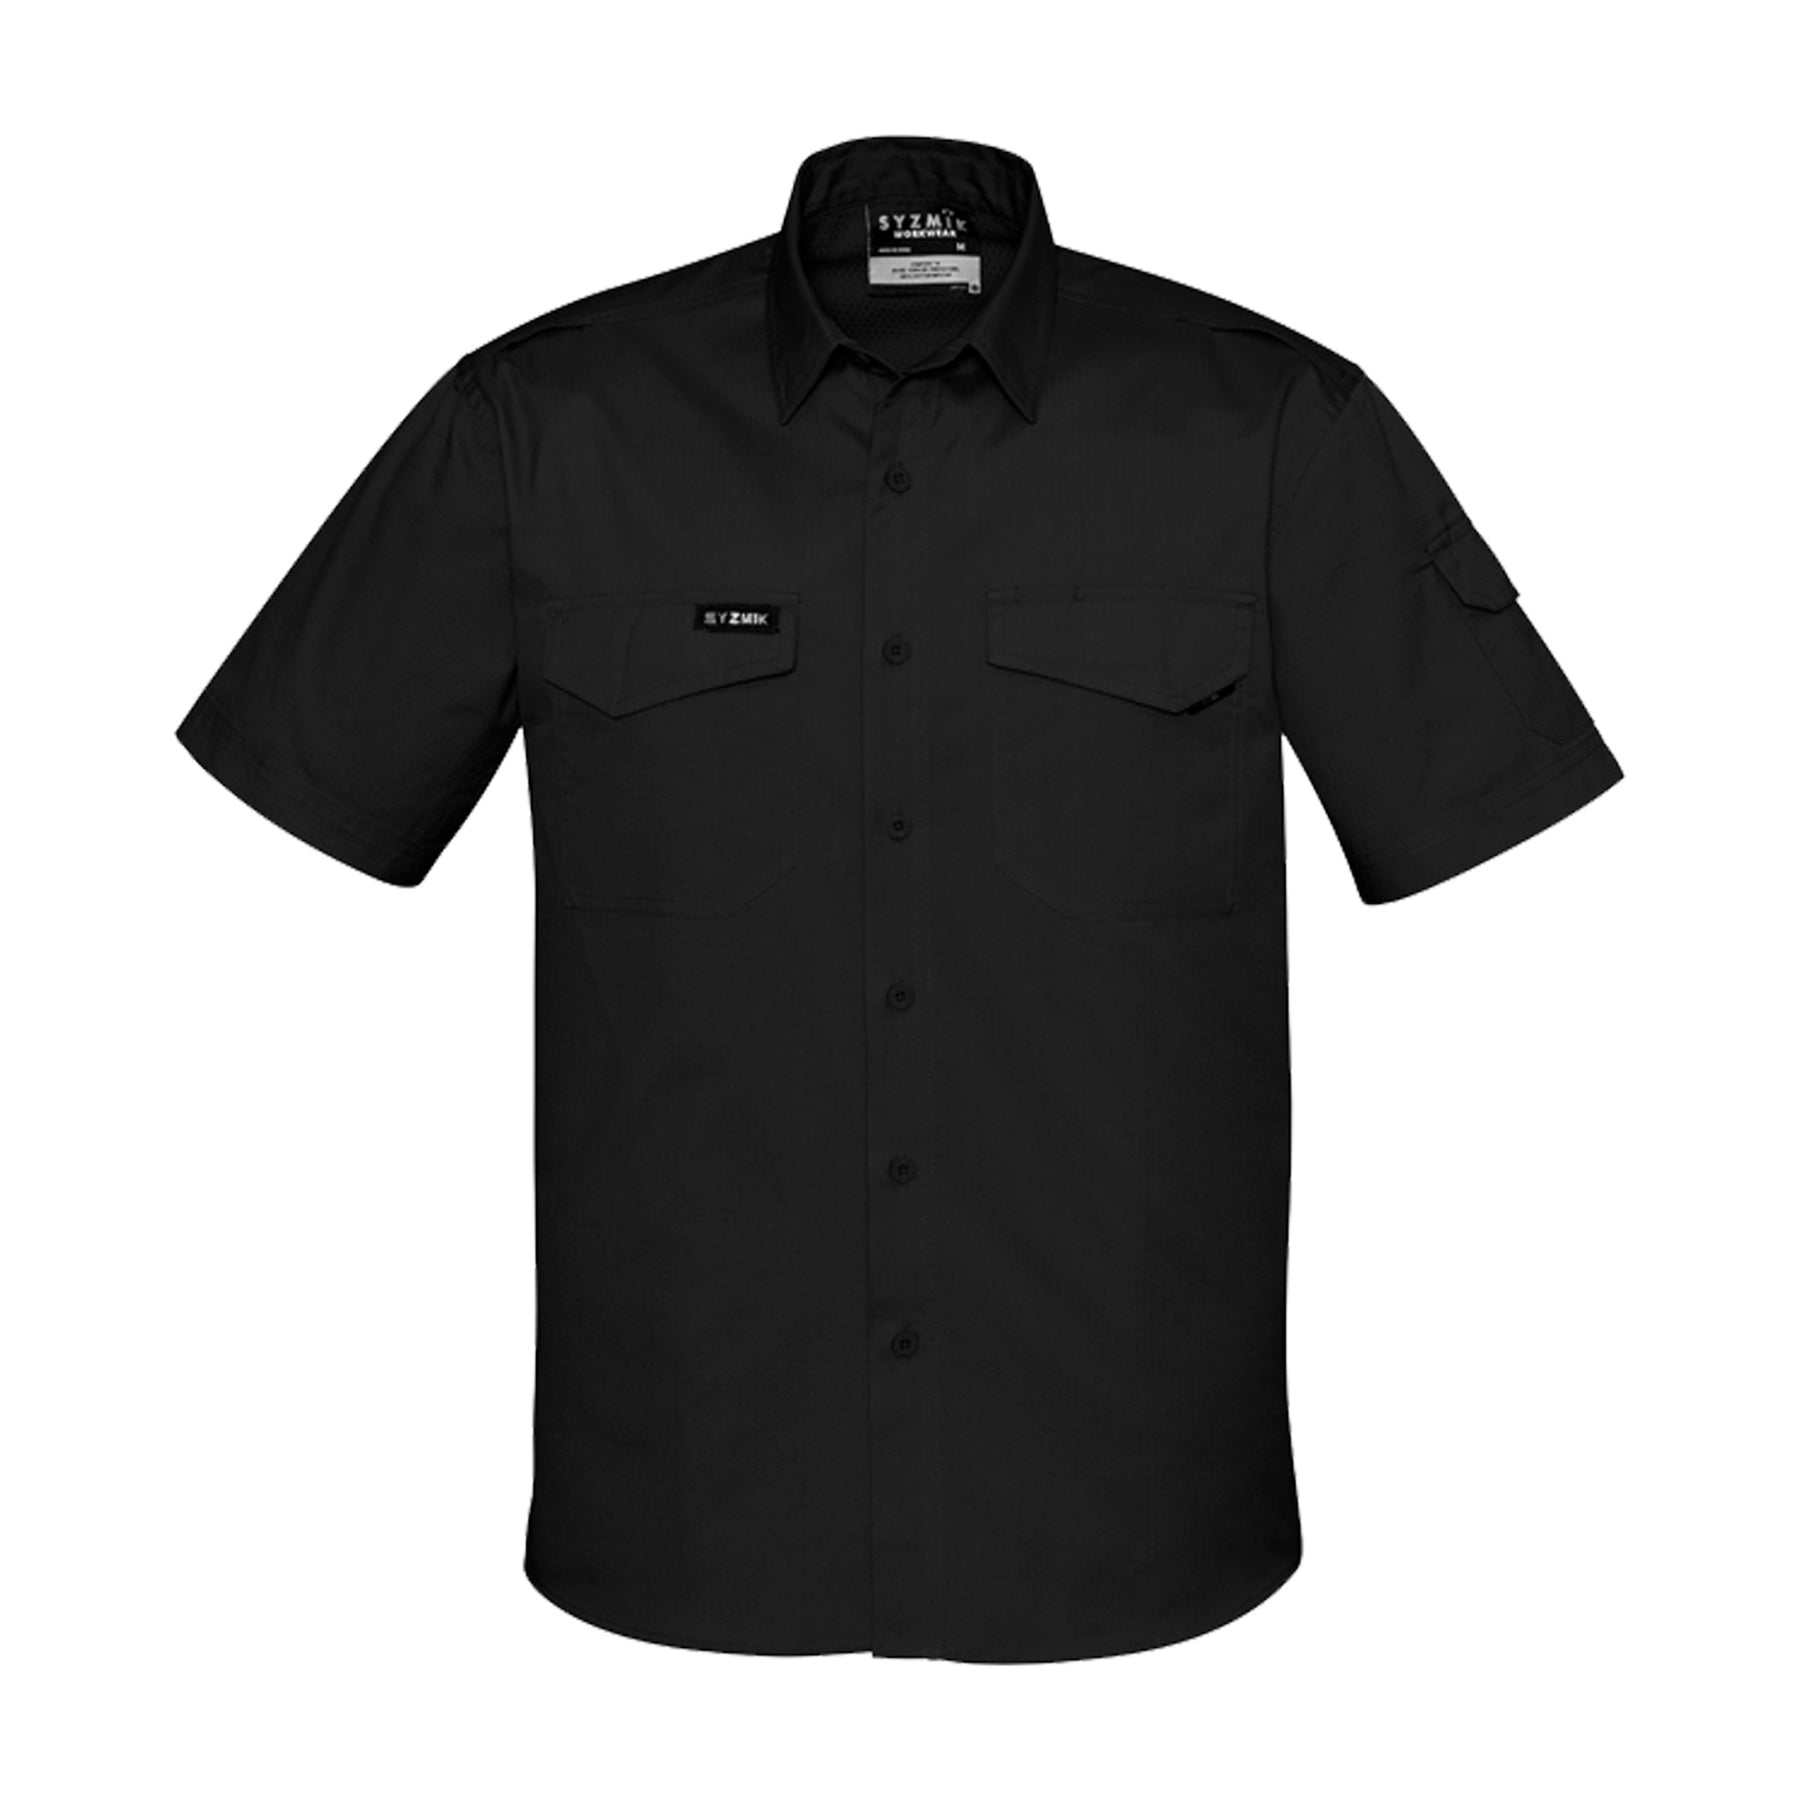 mens rugged cooling short sleeve shirt in black